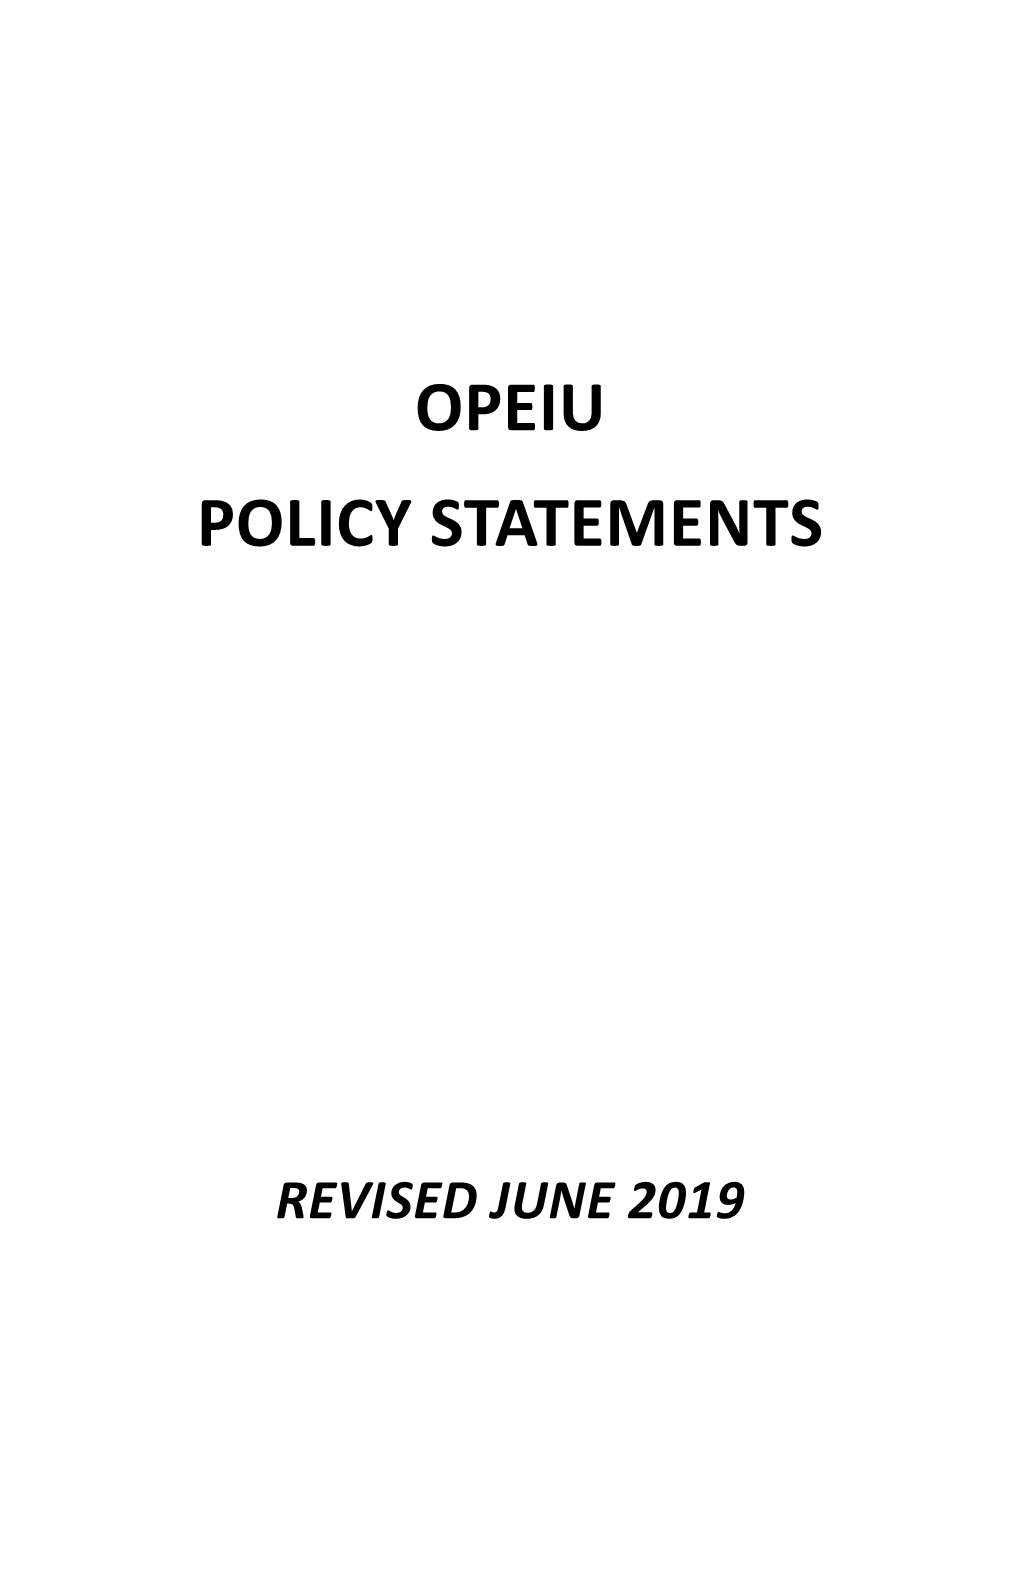 Opeiu Policy Statements